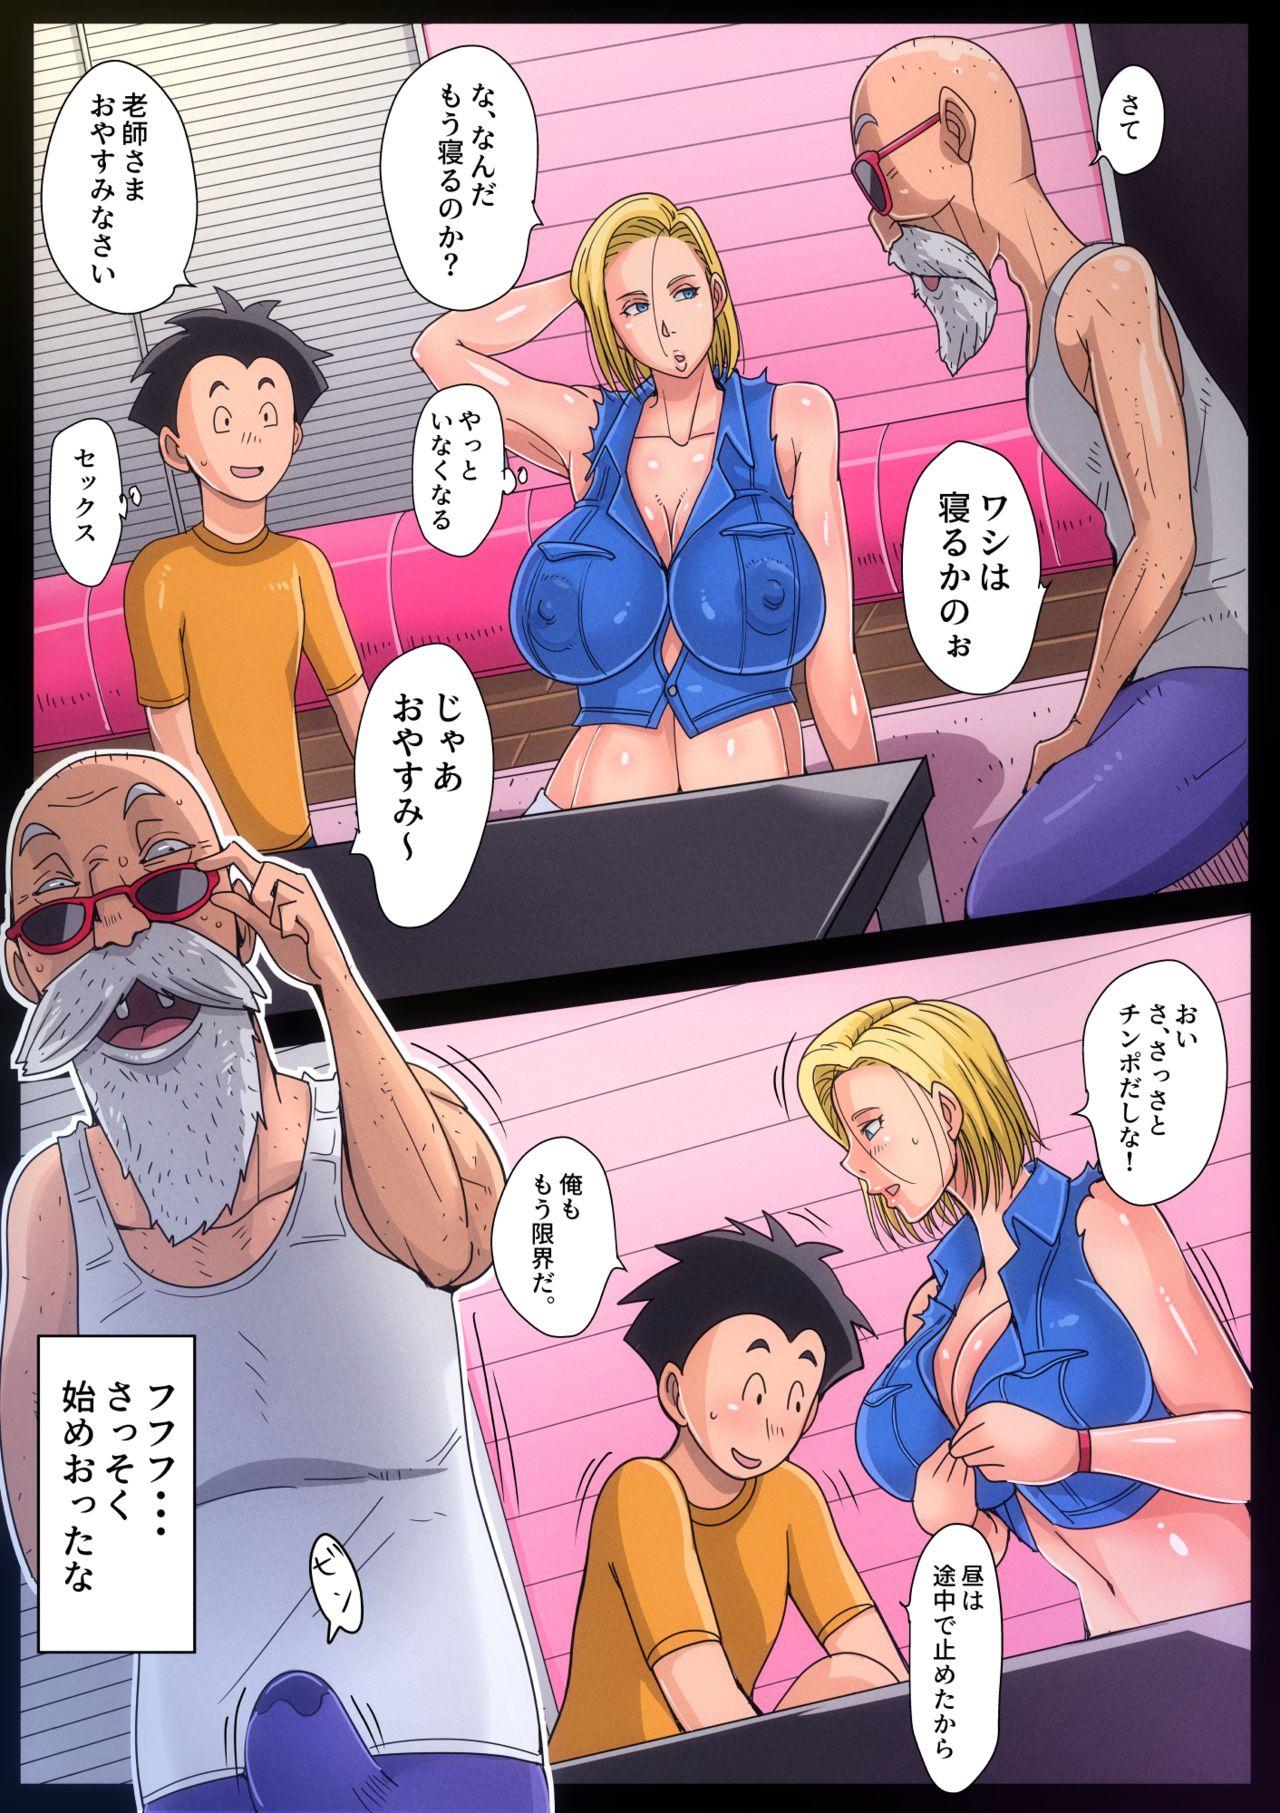 Joven B-Kyuu Manga 10 - Dragon ball z Straight - Page 3